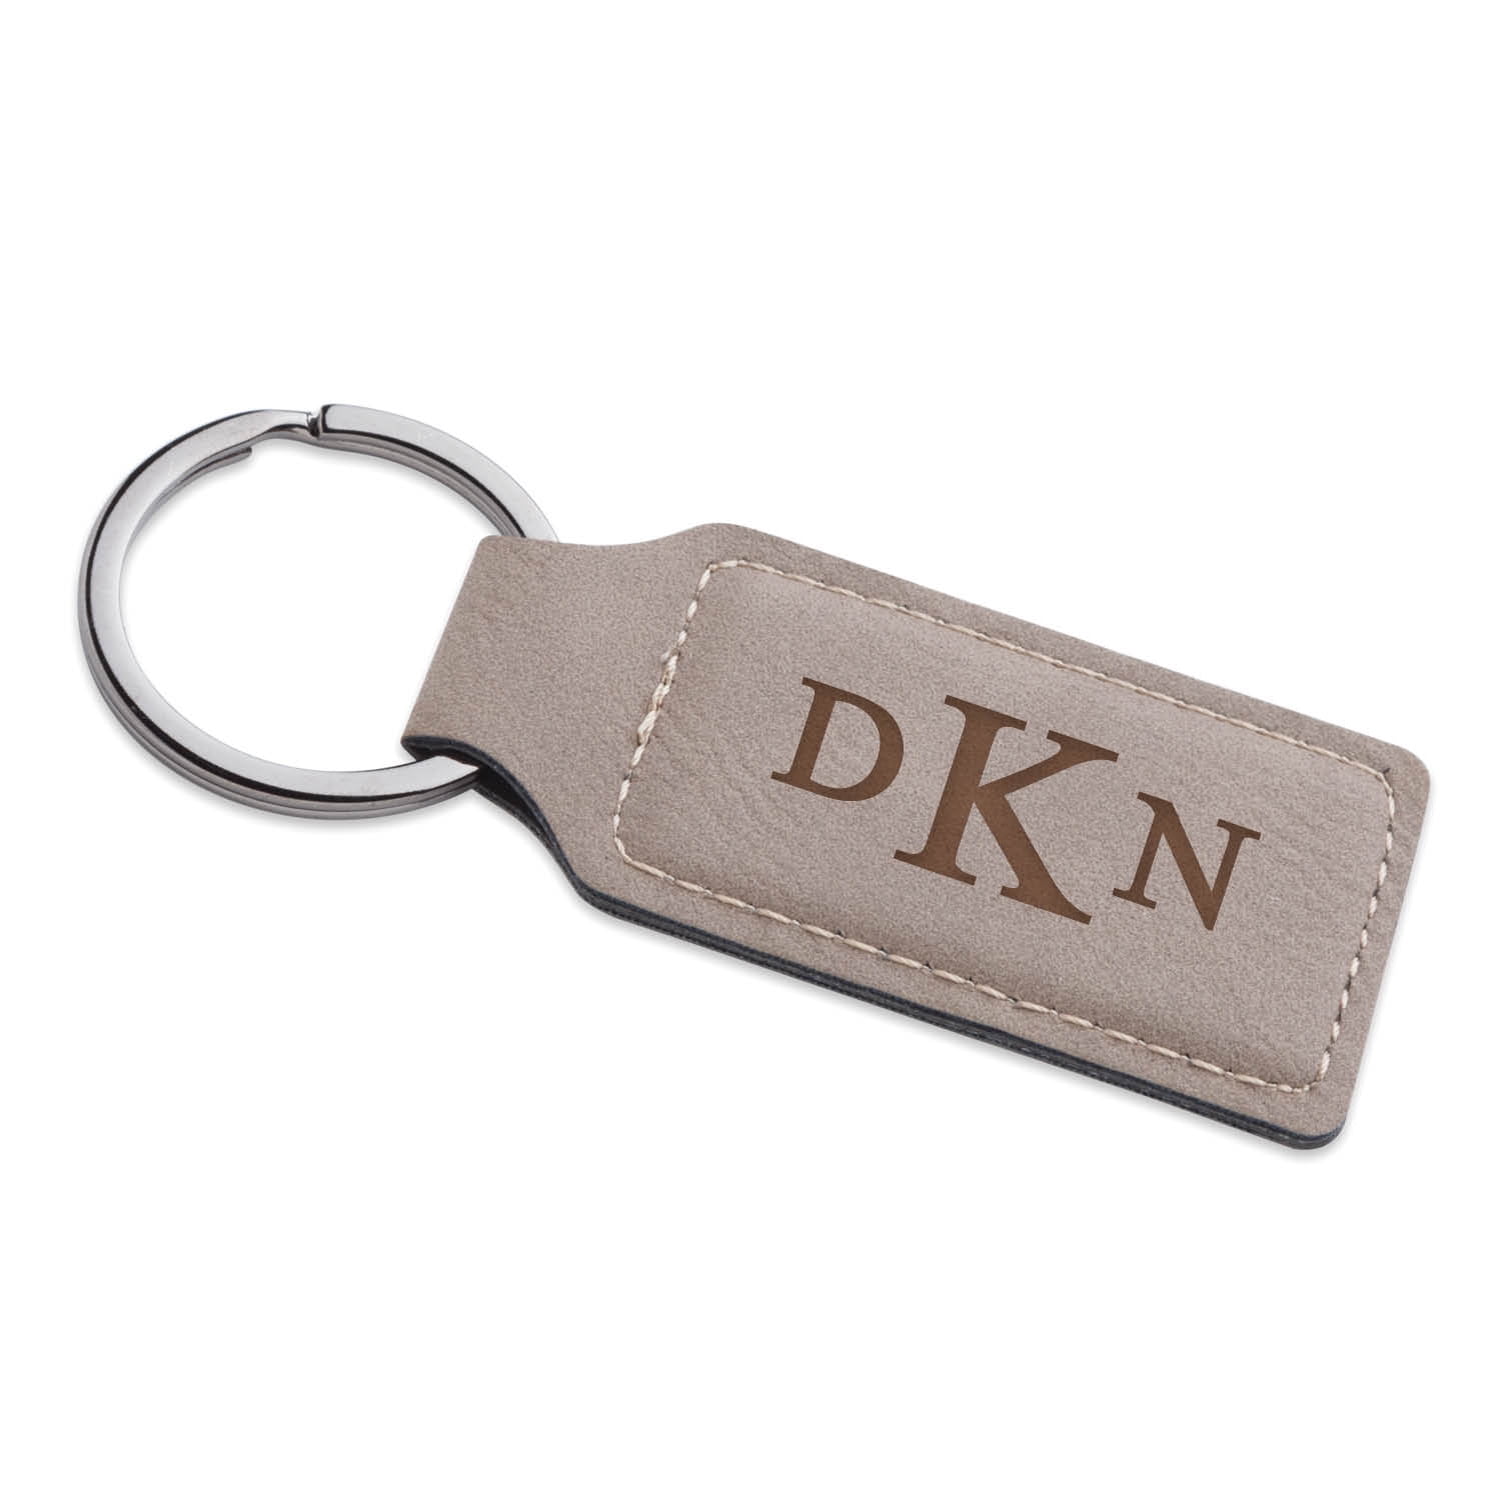 Personalized Key Chain with Monogram - Walmart.com